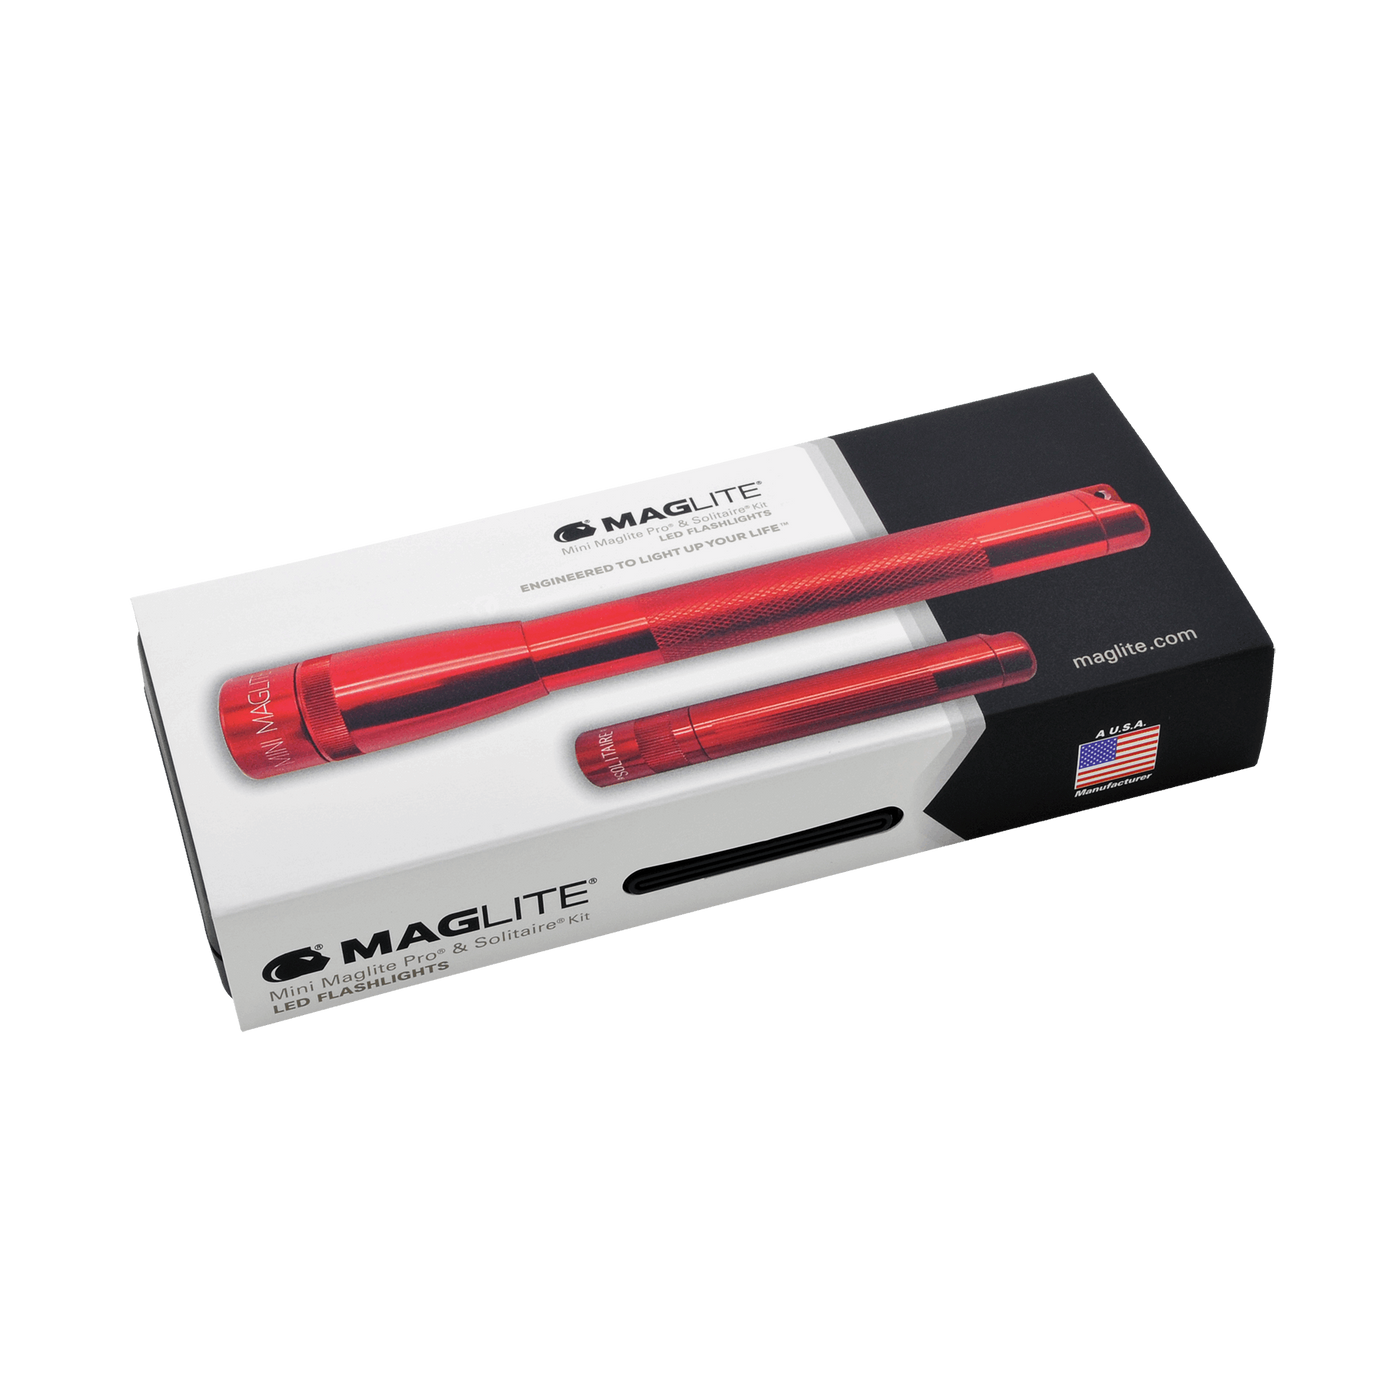 Maglite City Life Kit LED Pocket Flashlight-Red